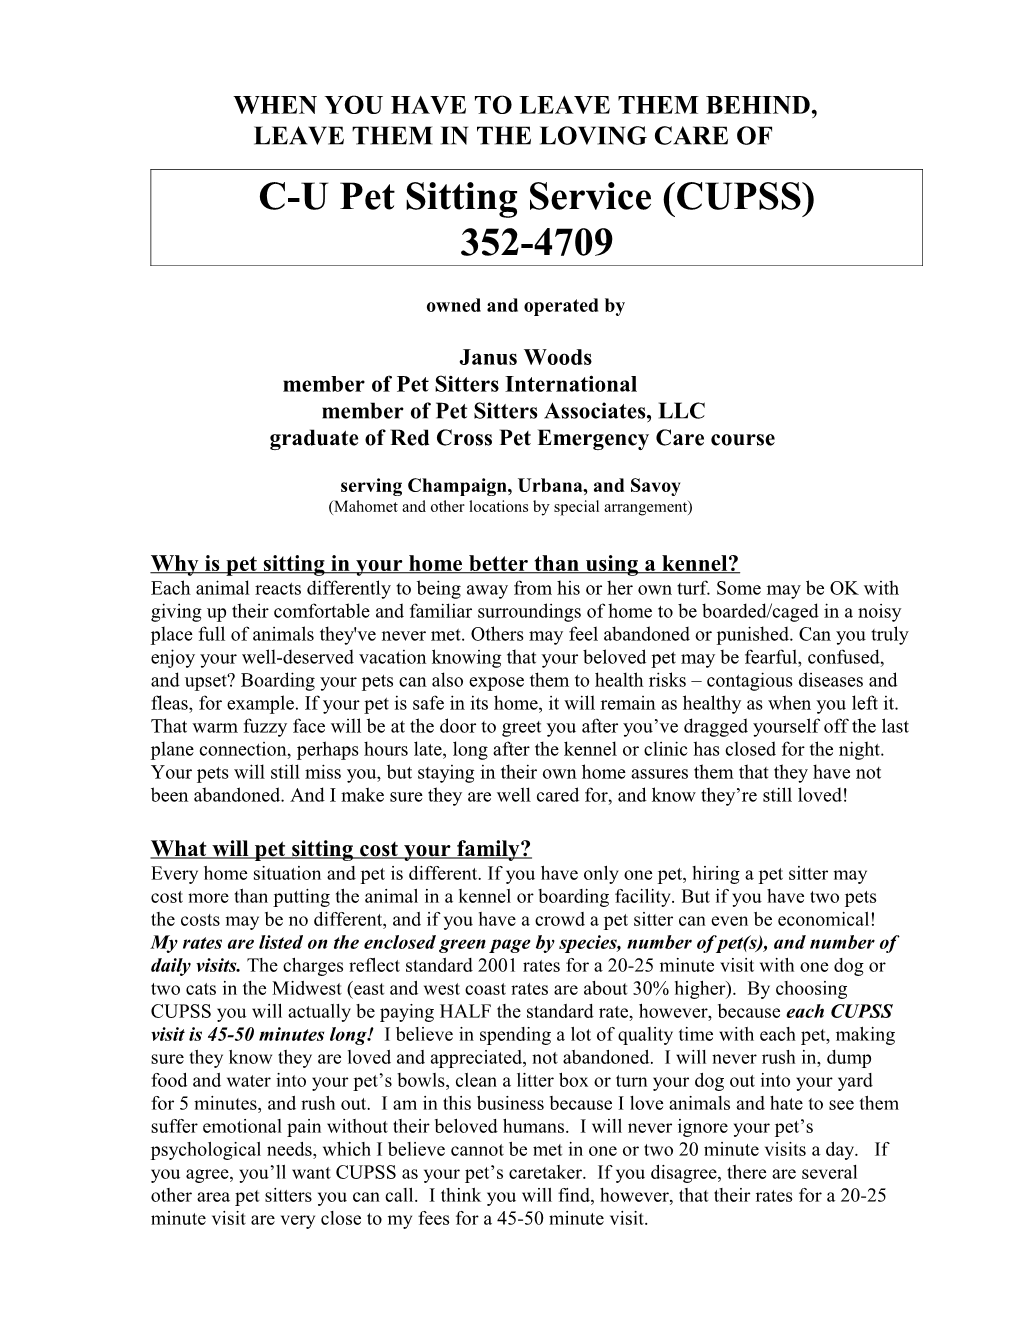 C-U Pet Sitting Services (CUPSS)